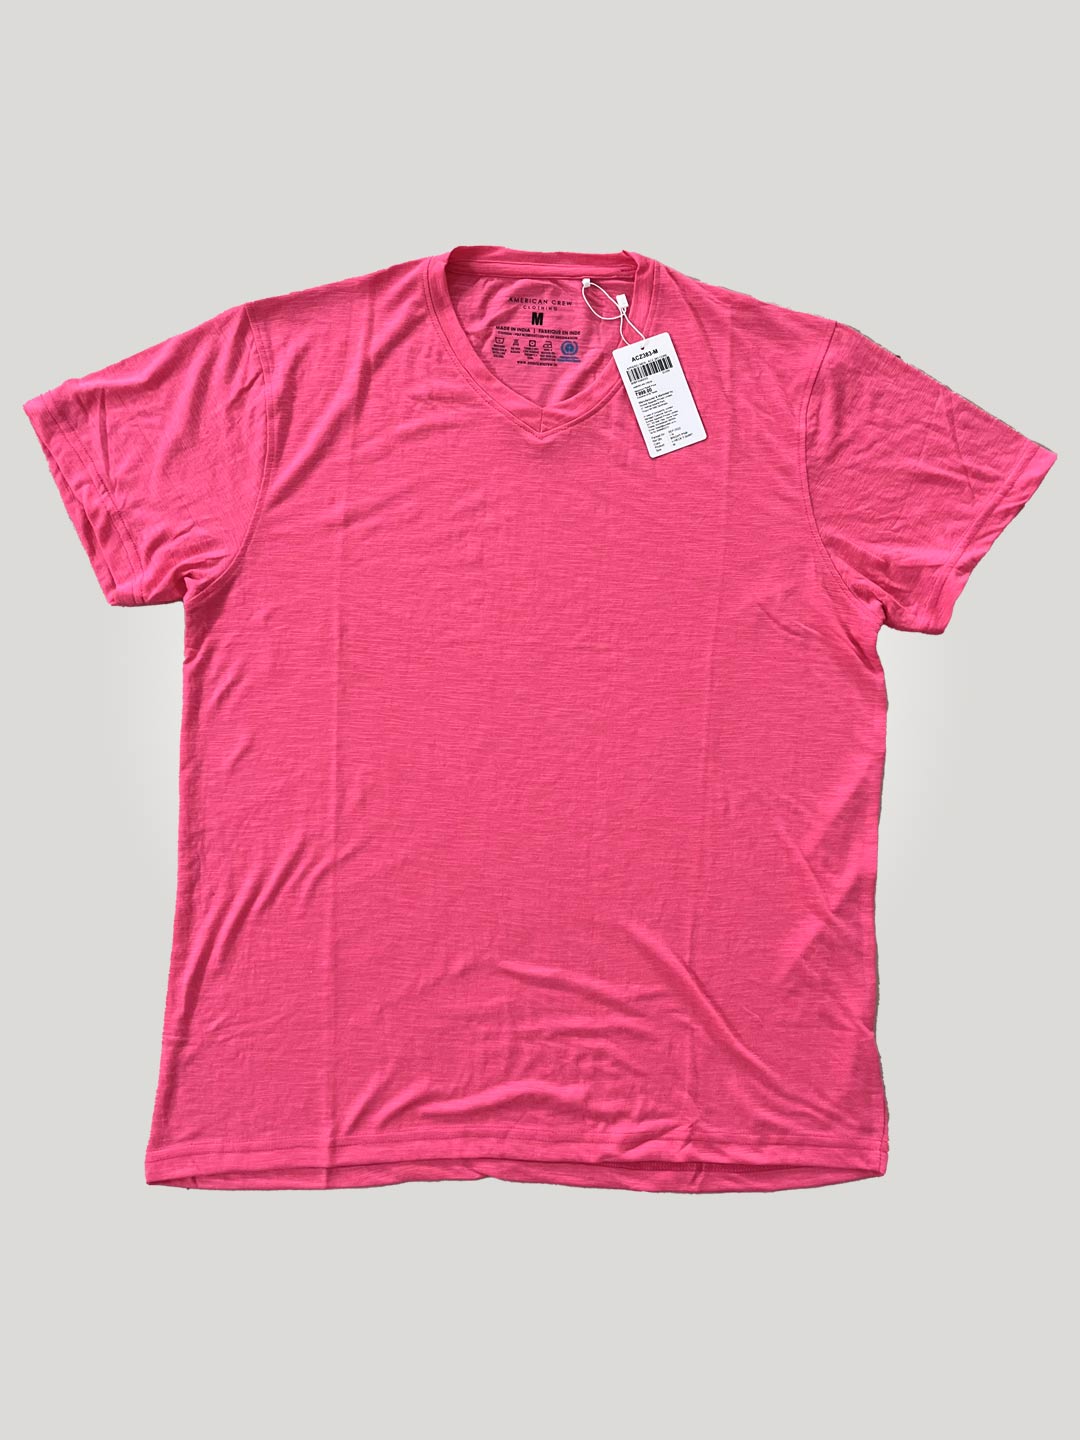 V Neck T-Shirt for Men - Bright Pink (Clearance - No Exchange No Return)